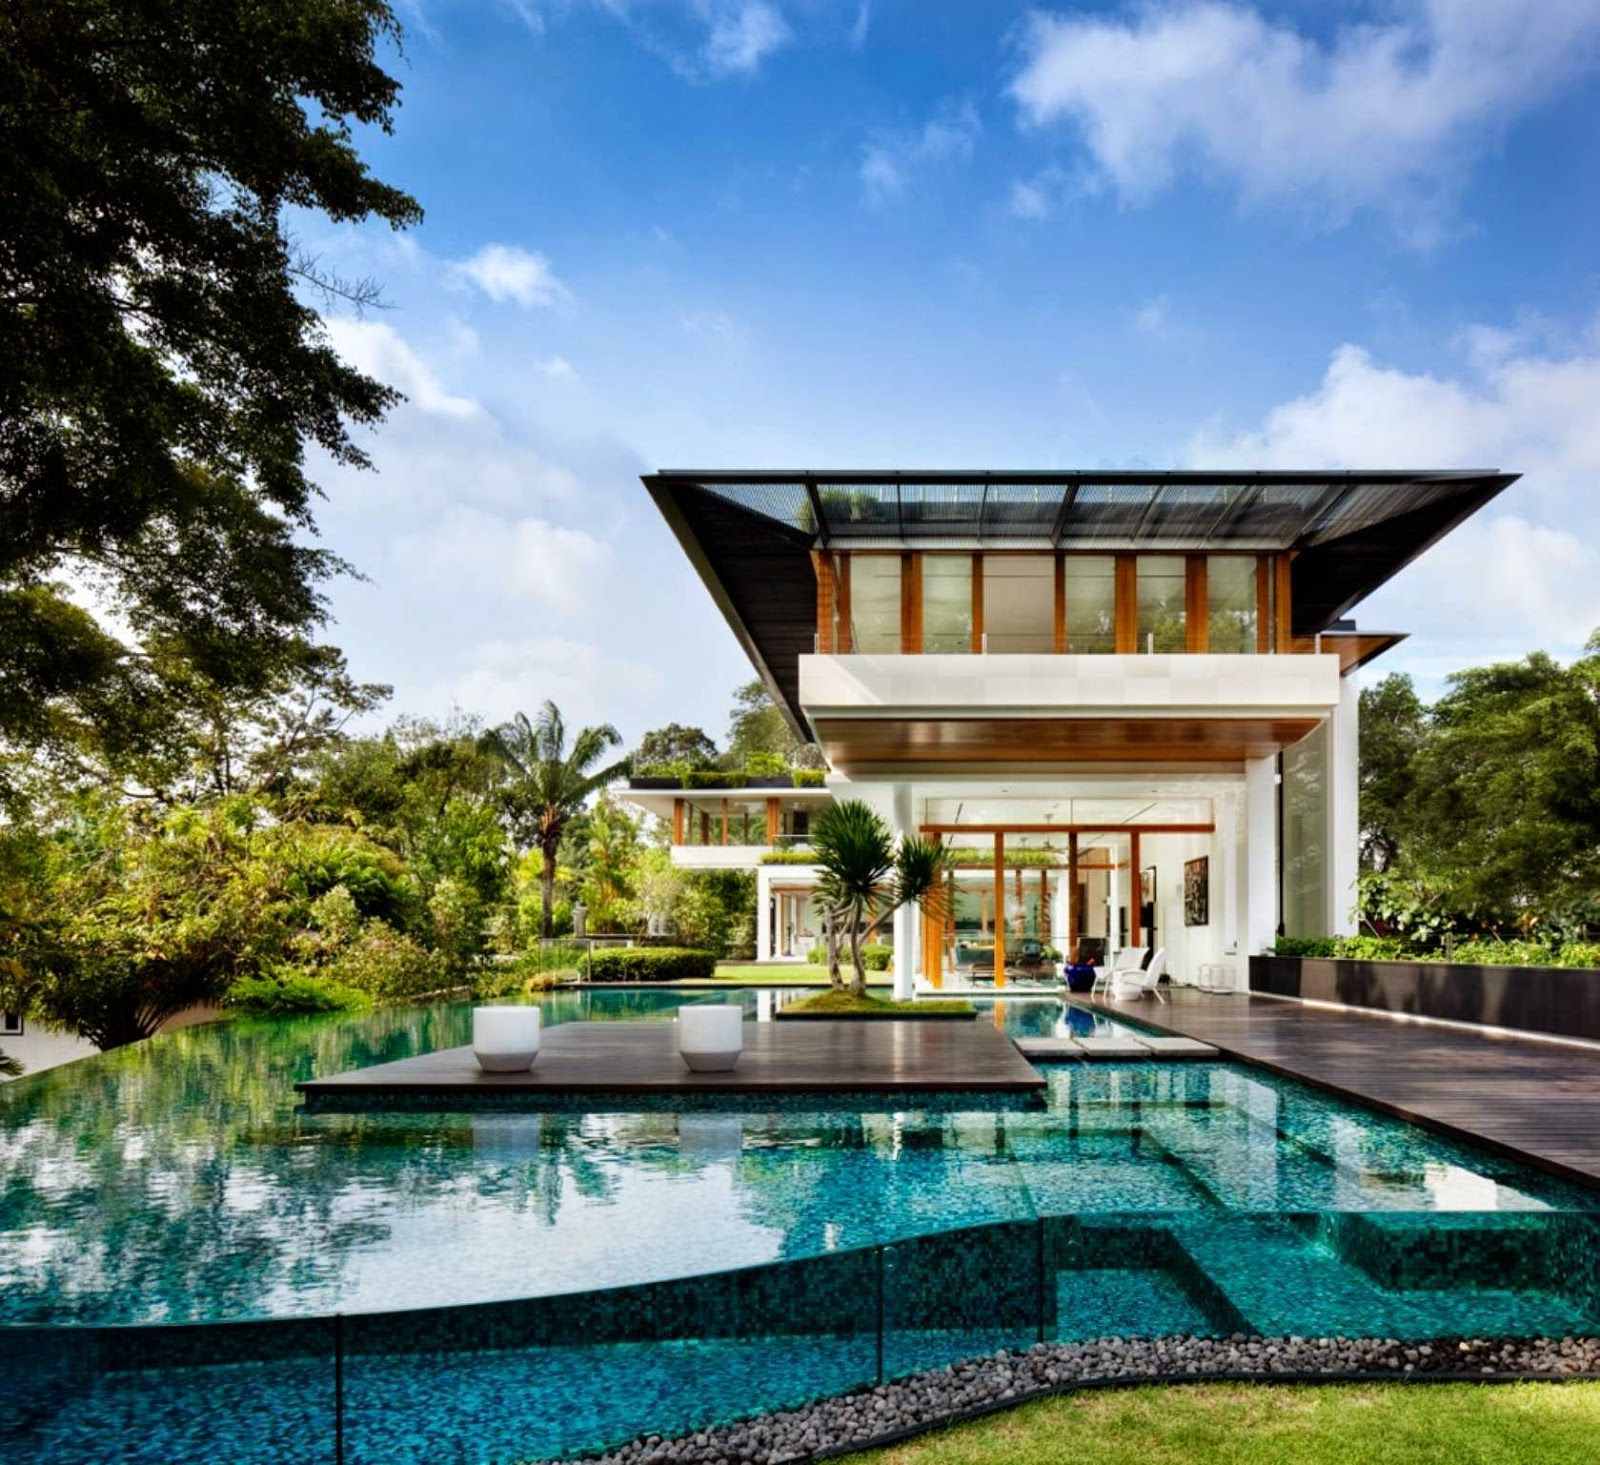 Pool Garten Gestaltung Best Of Beautiful Big House with A Pool Beautiful Modern House with